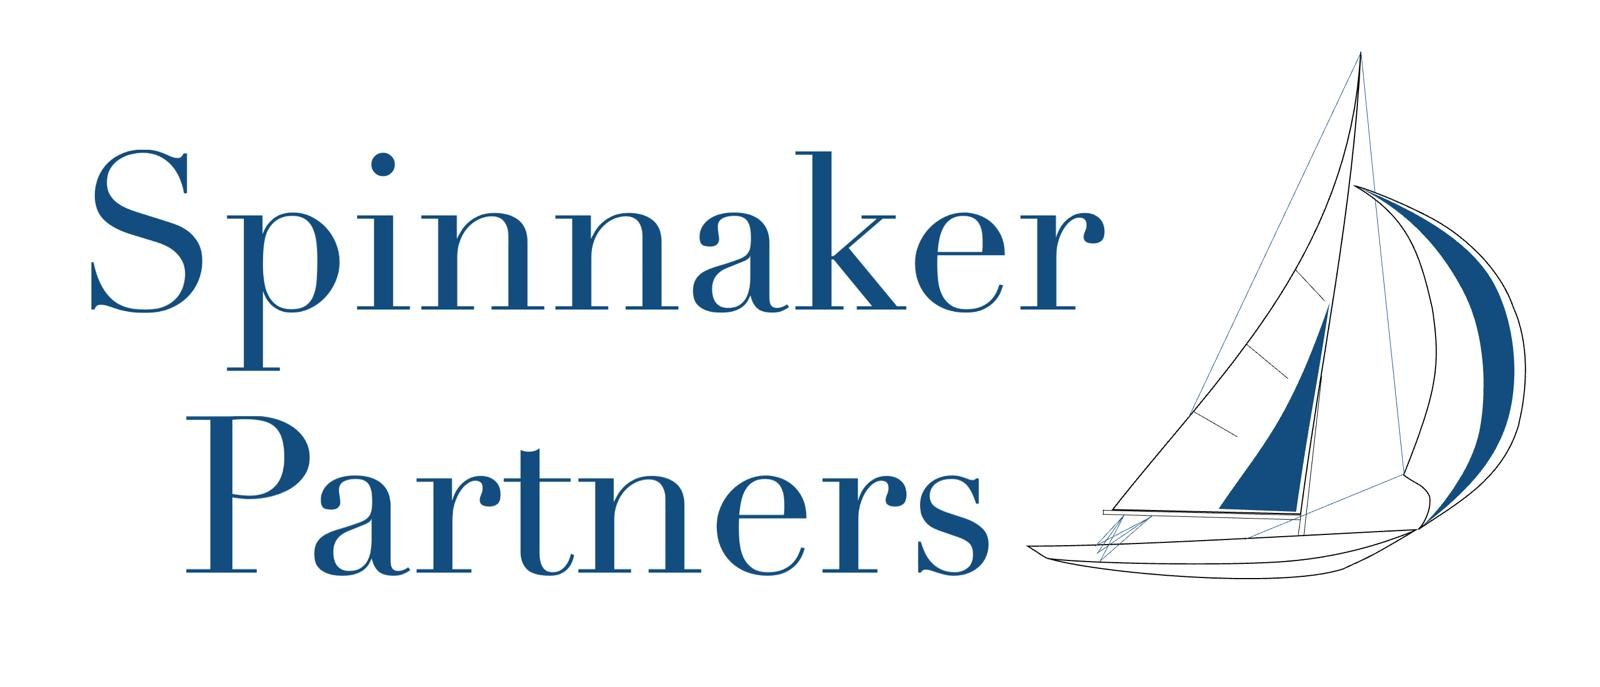 Spinnaker Partners